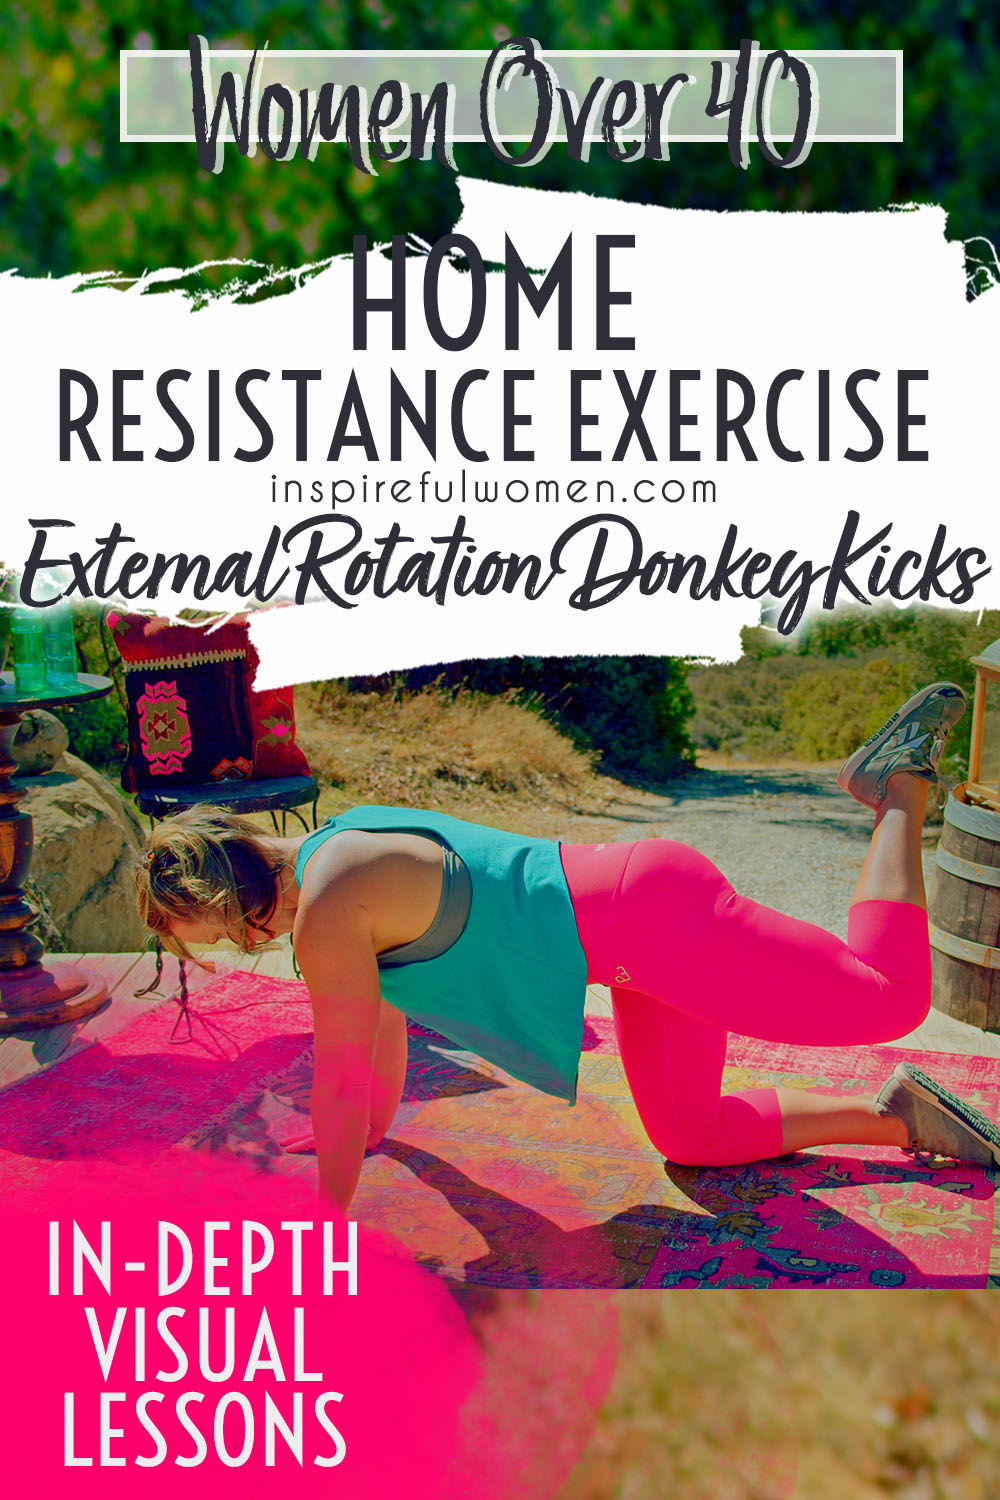 donkey-kick-external-hip-rotation-bodyweight-ground-glute-isolation-exercise-women-40-plus